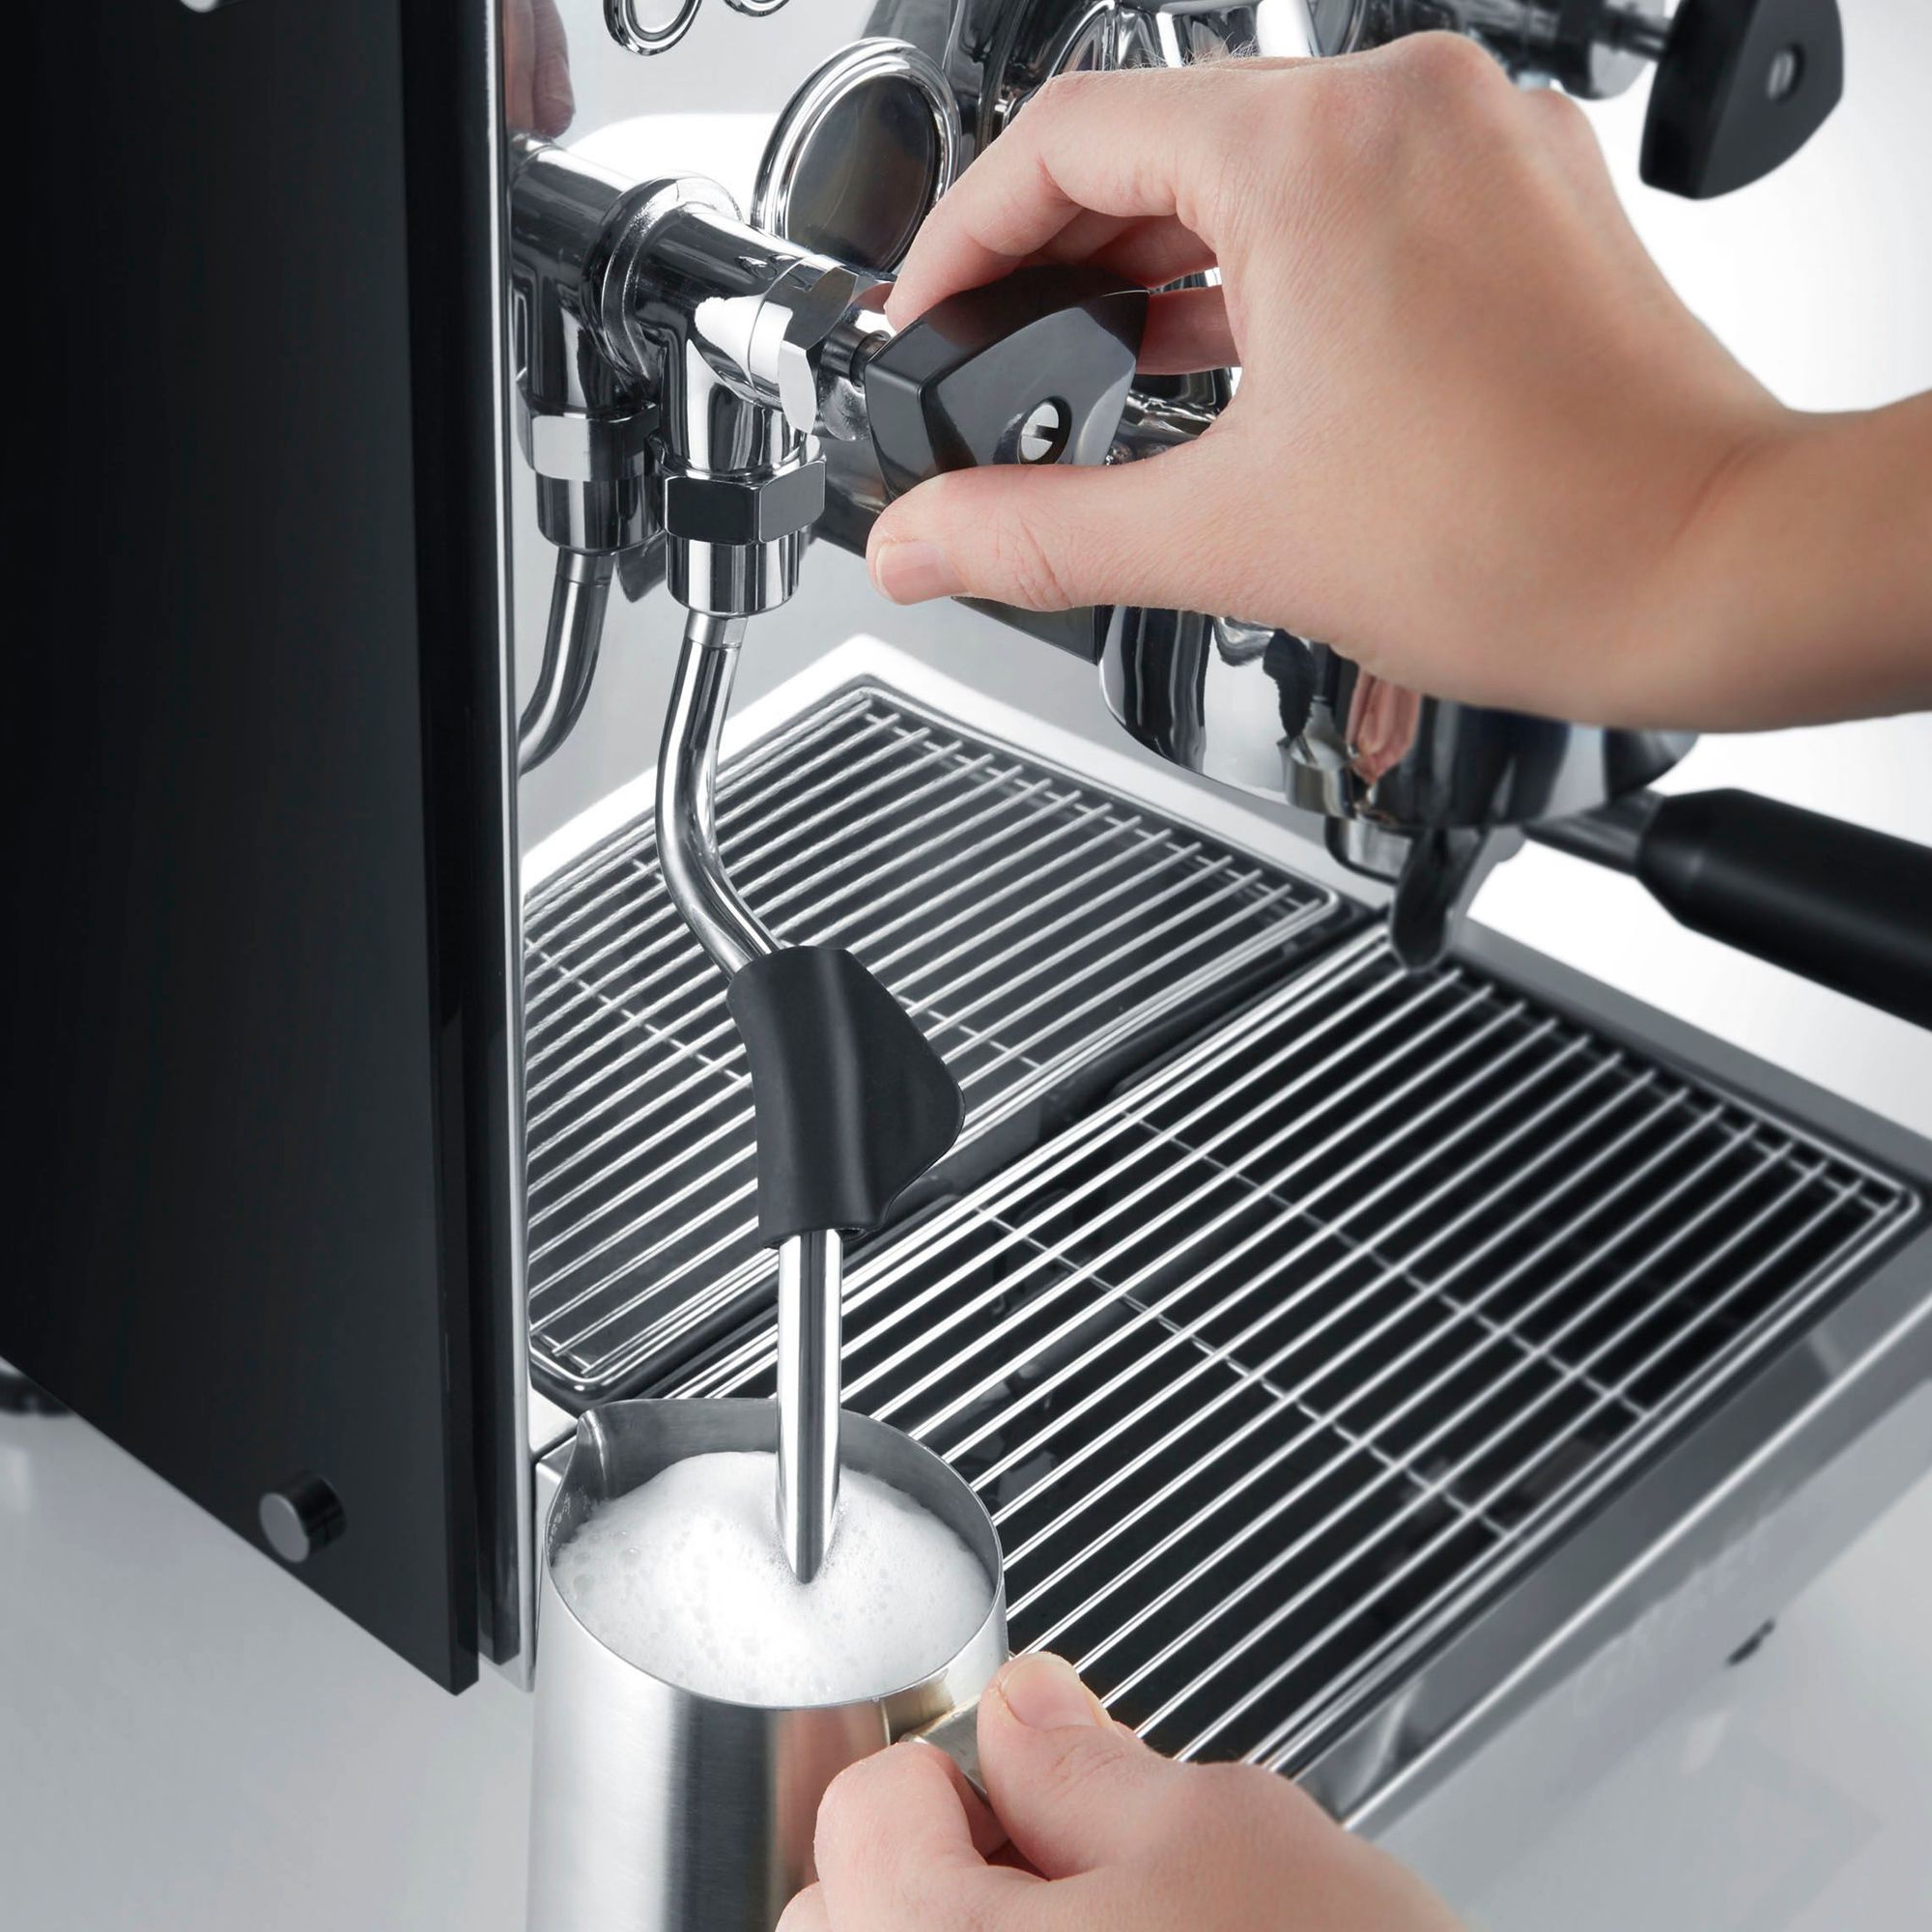 Graef - Espresso Machine contessa